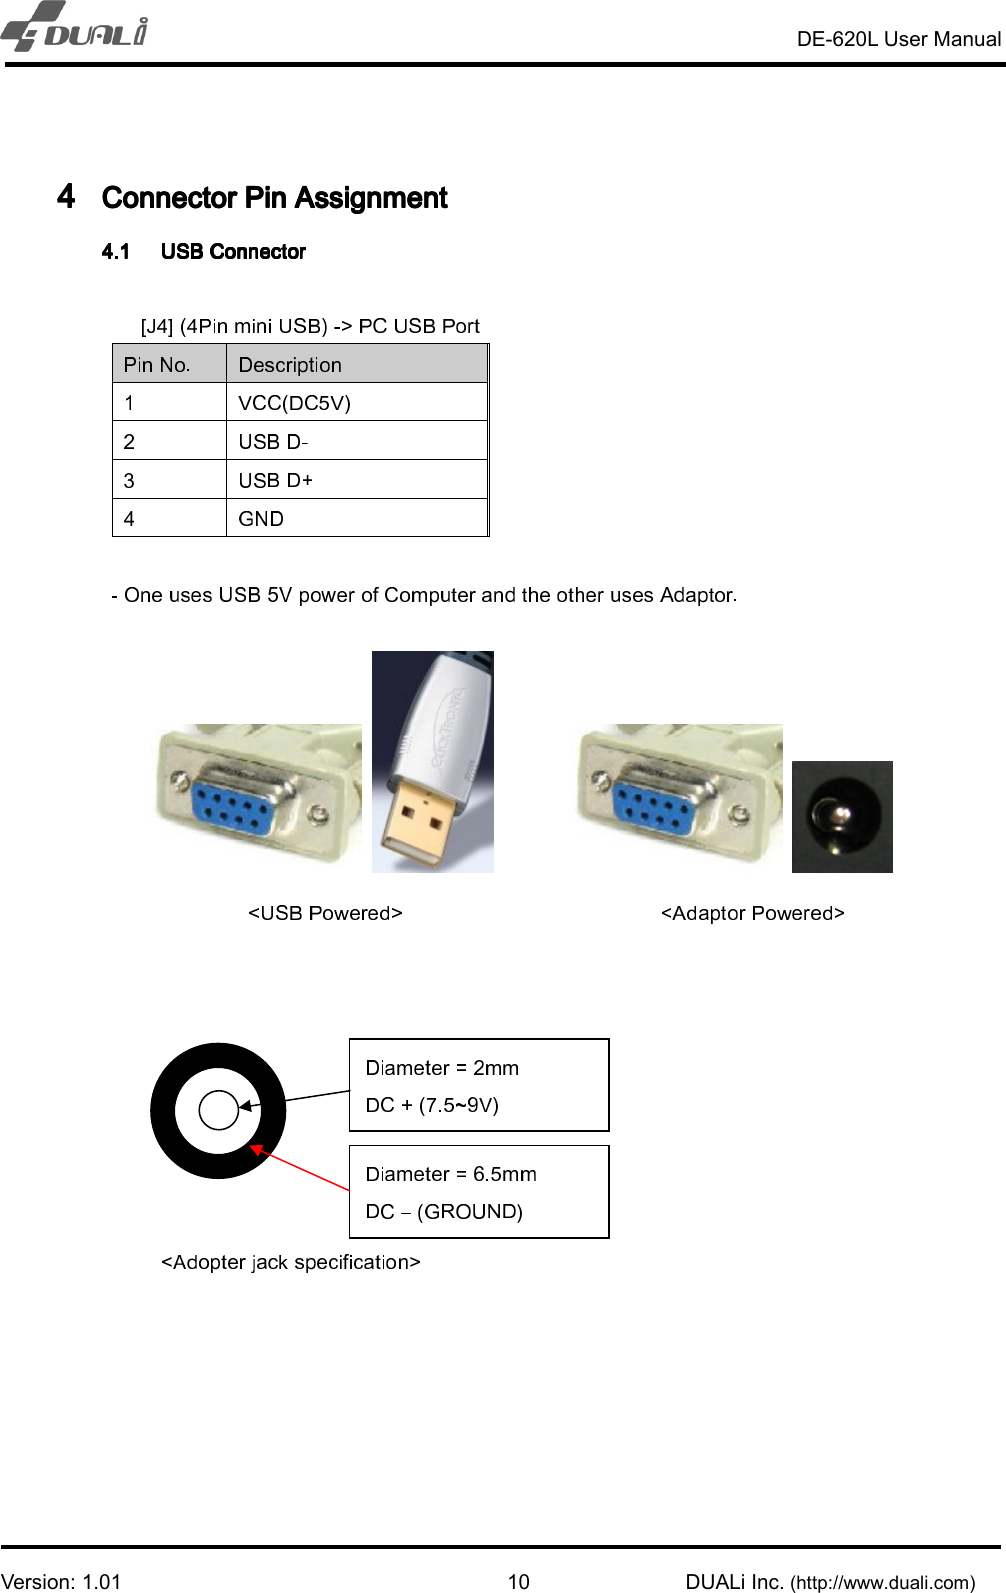   DE-620L User Manual  Version: 1.01                                                                                                            DUALi Inc. (http://www.duali.com) 104444 Connector Connector Connector Connector PPPPin in in in AAAAssignmentssignmentssignmentssignment     